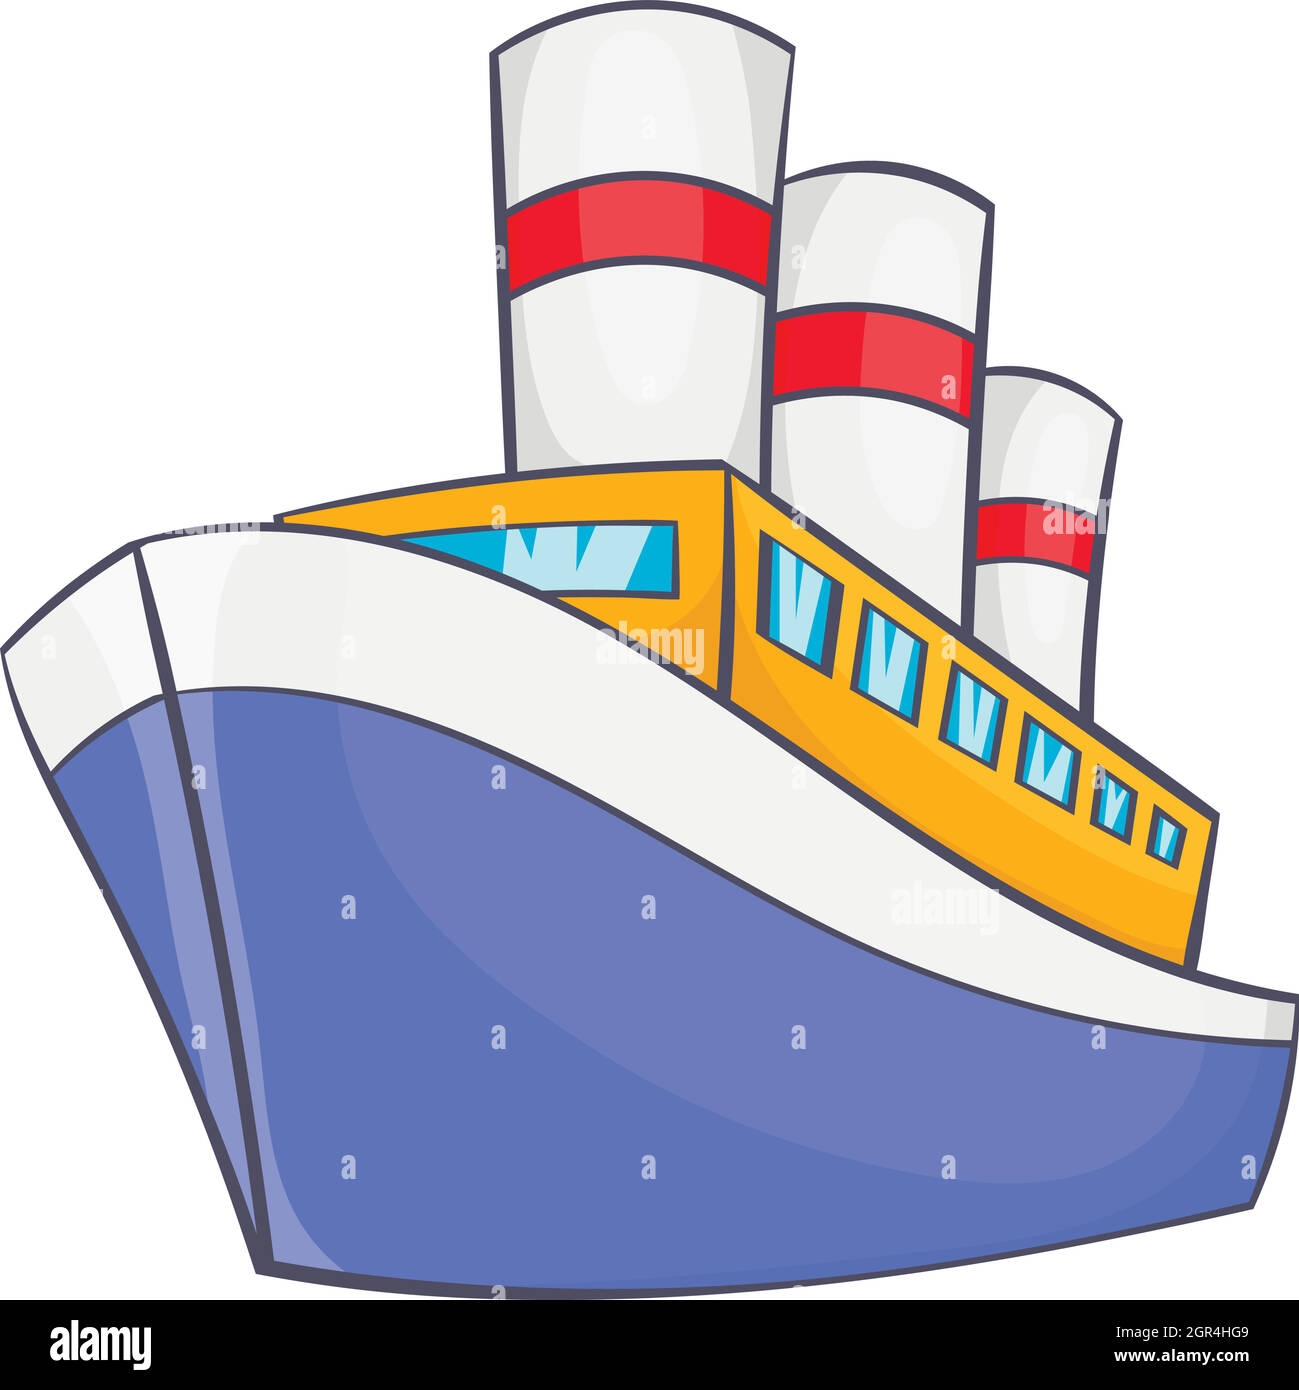 Cartoon ship hi-res stock photography and images - Alamy